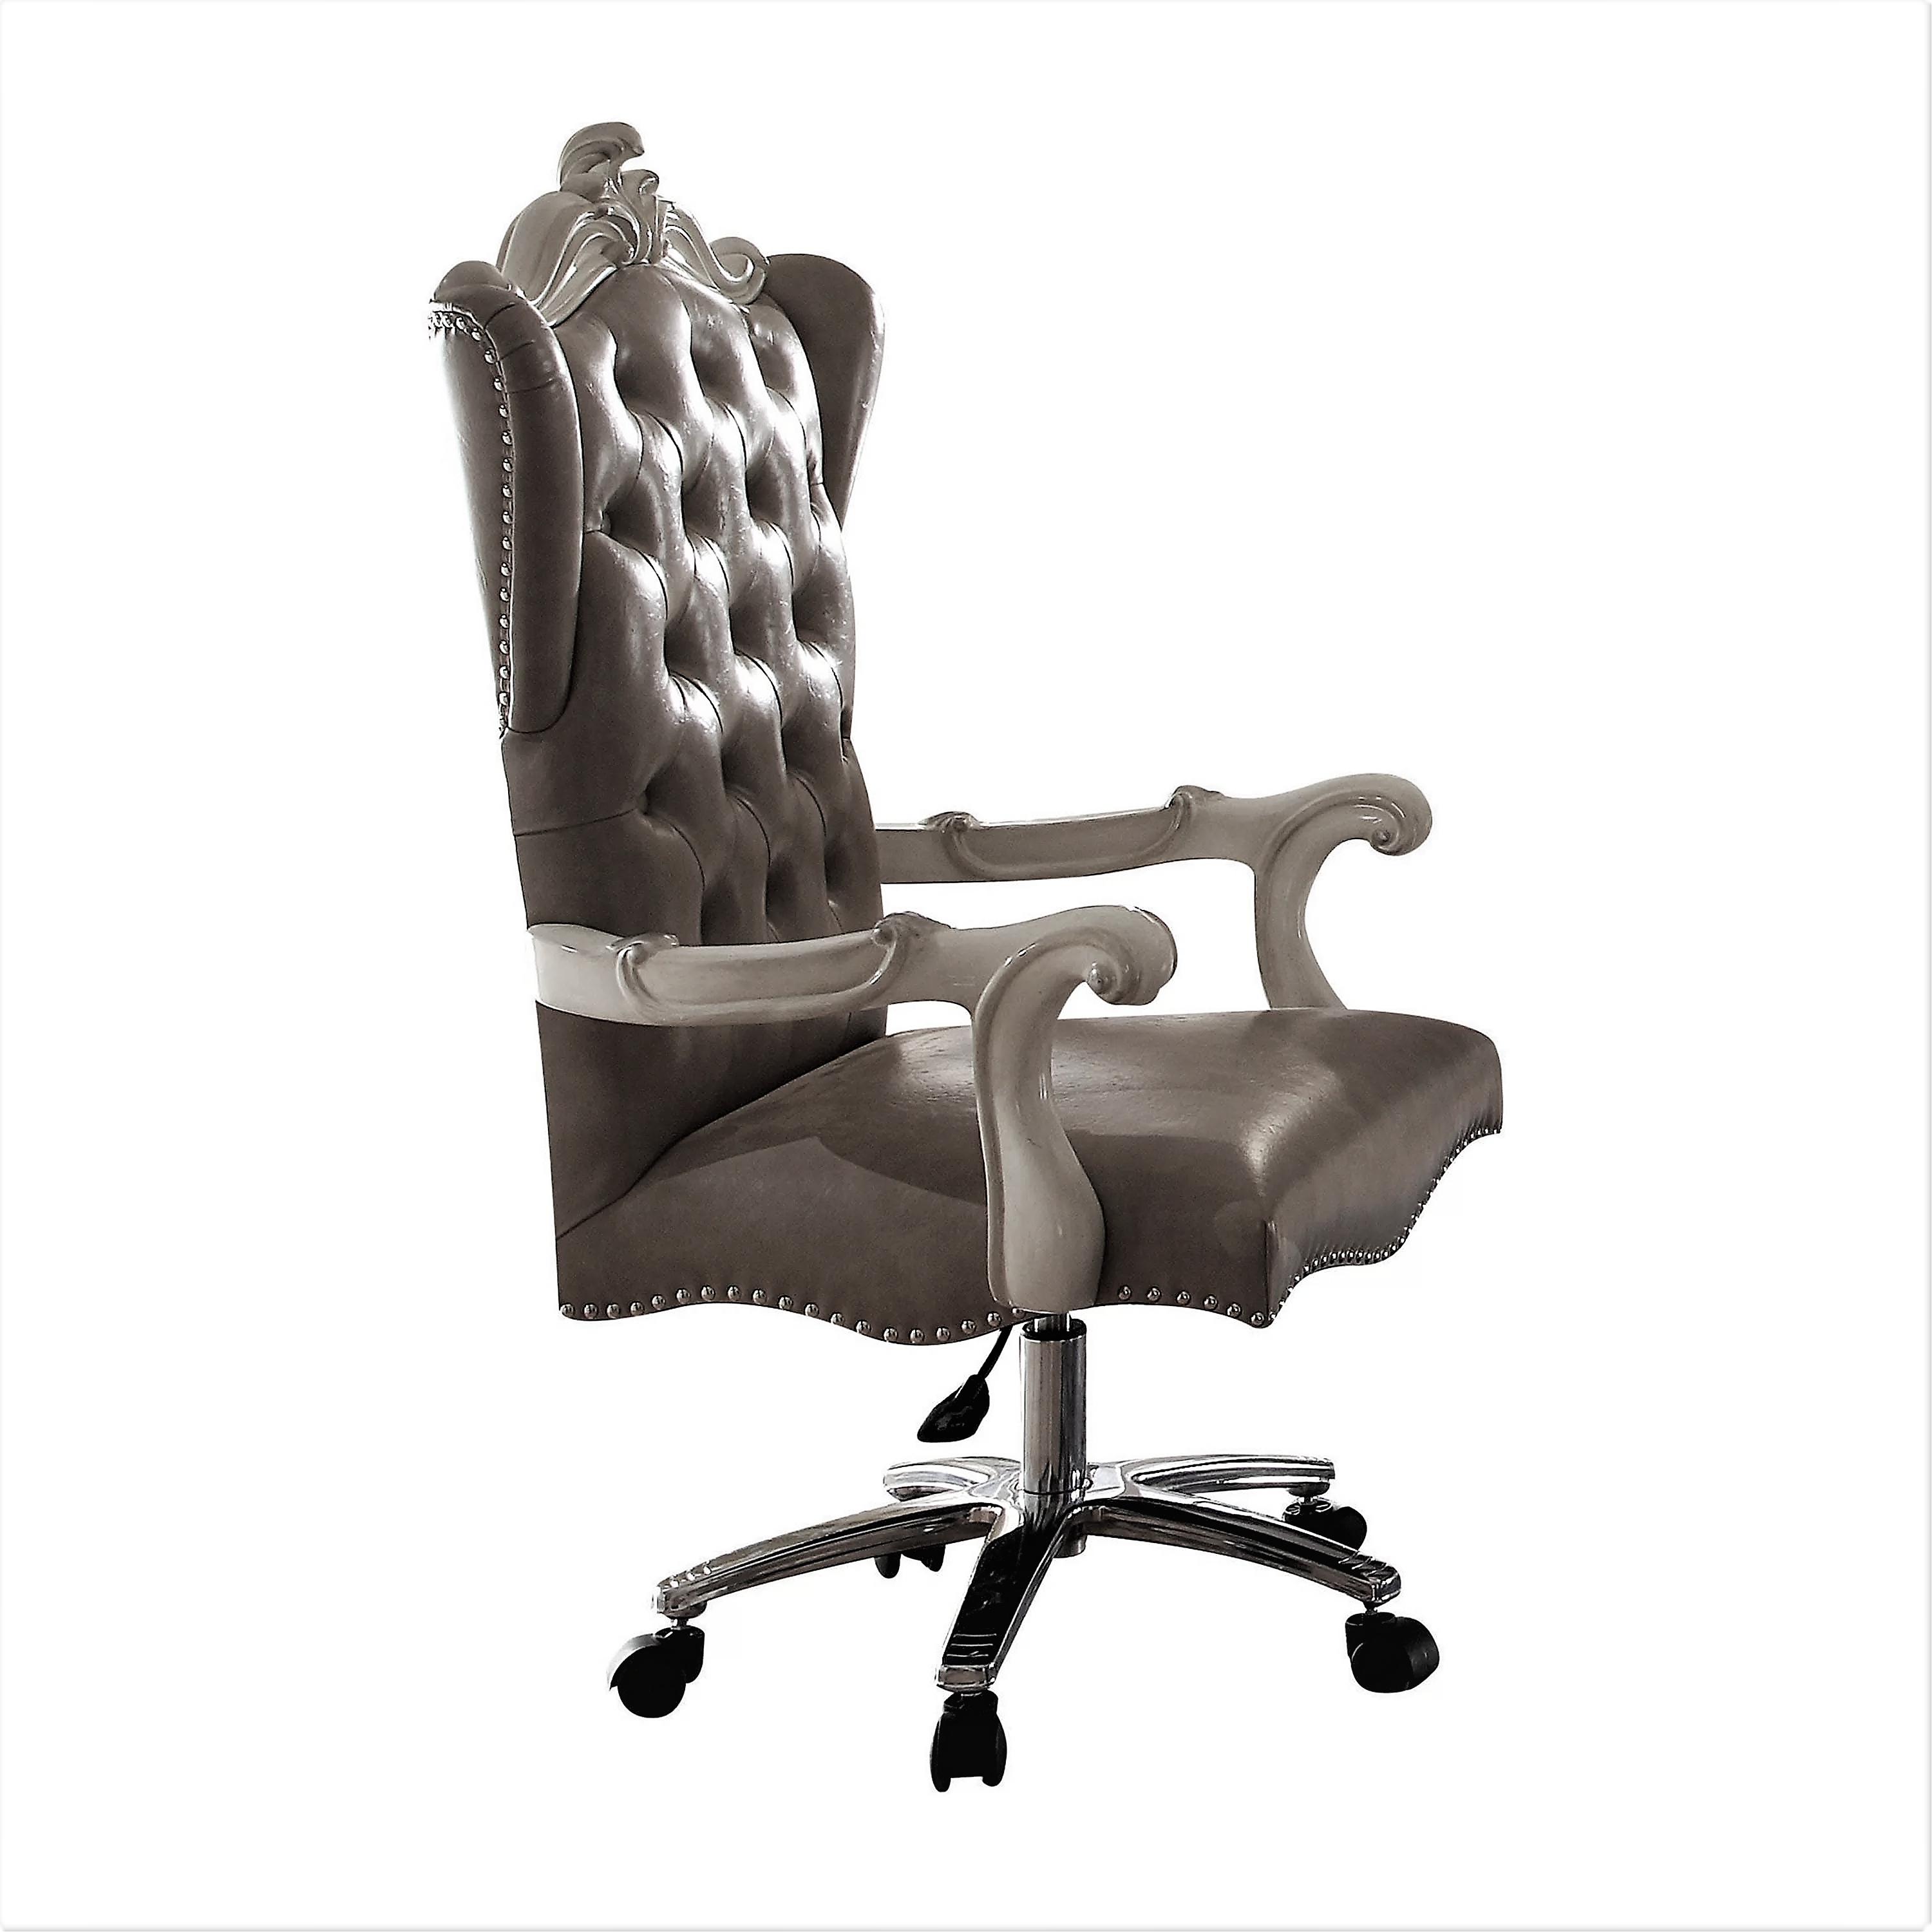 Classic, European Traditional Executive Office Chair Versailles 92822 in Platinum PU